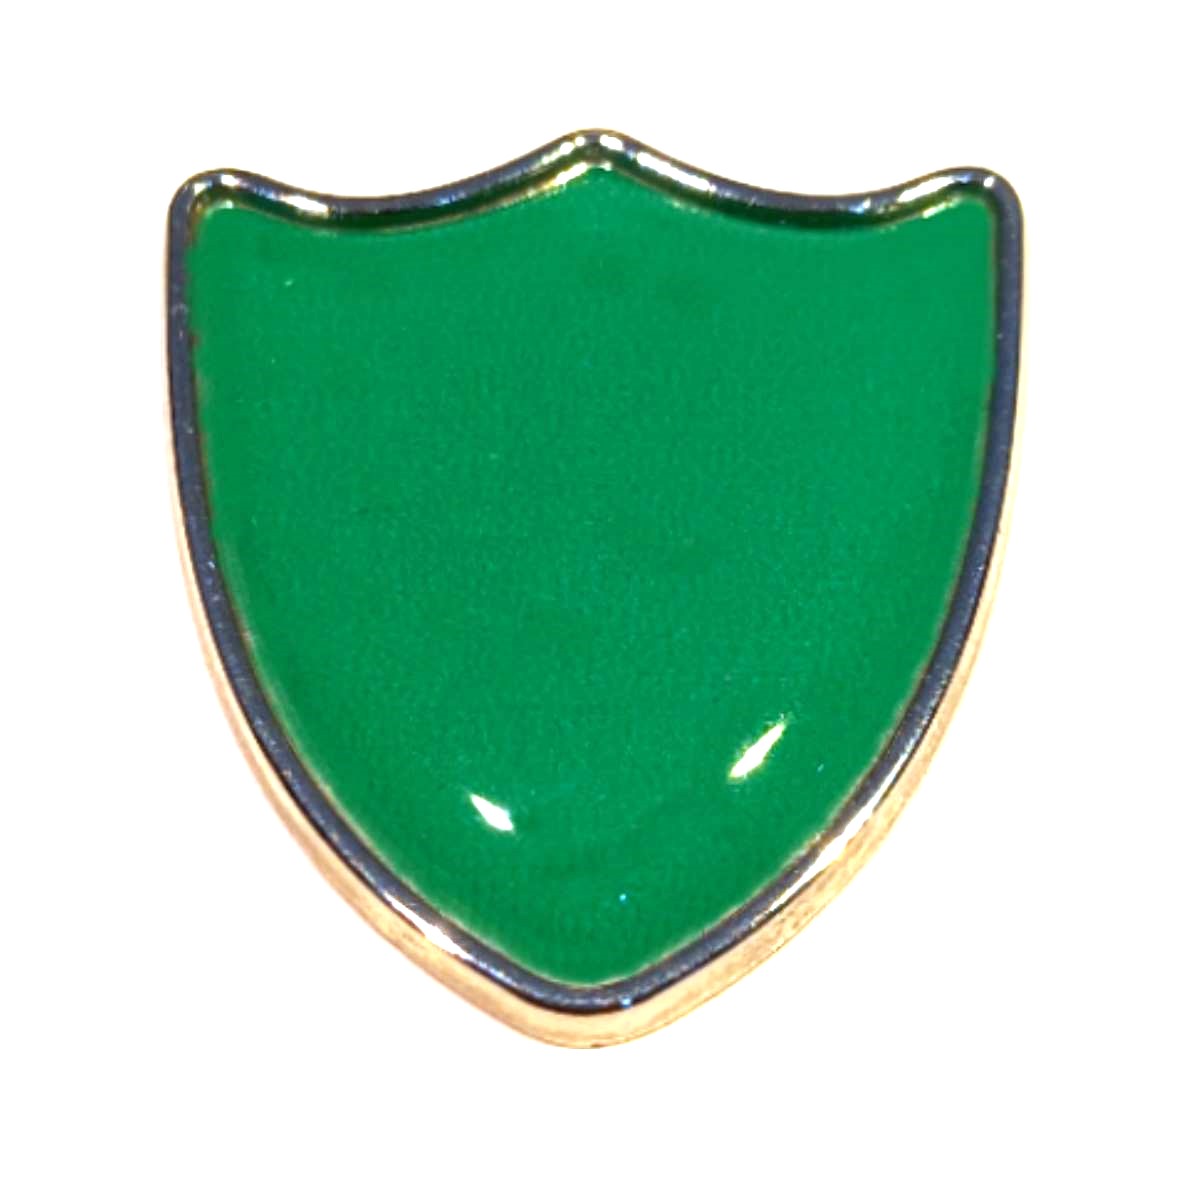 Emerald Green shield badge